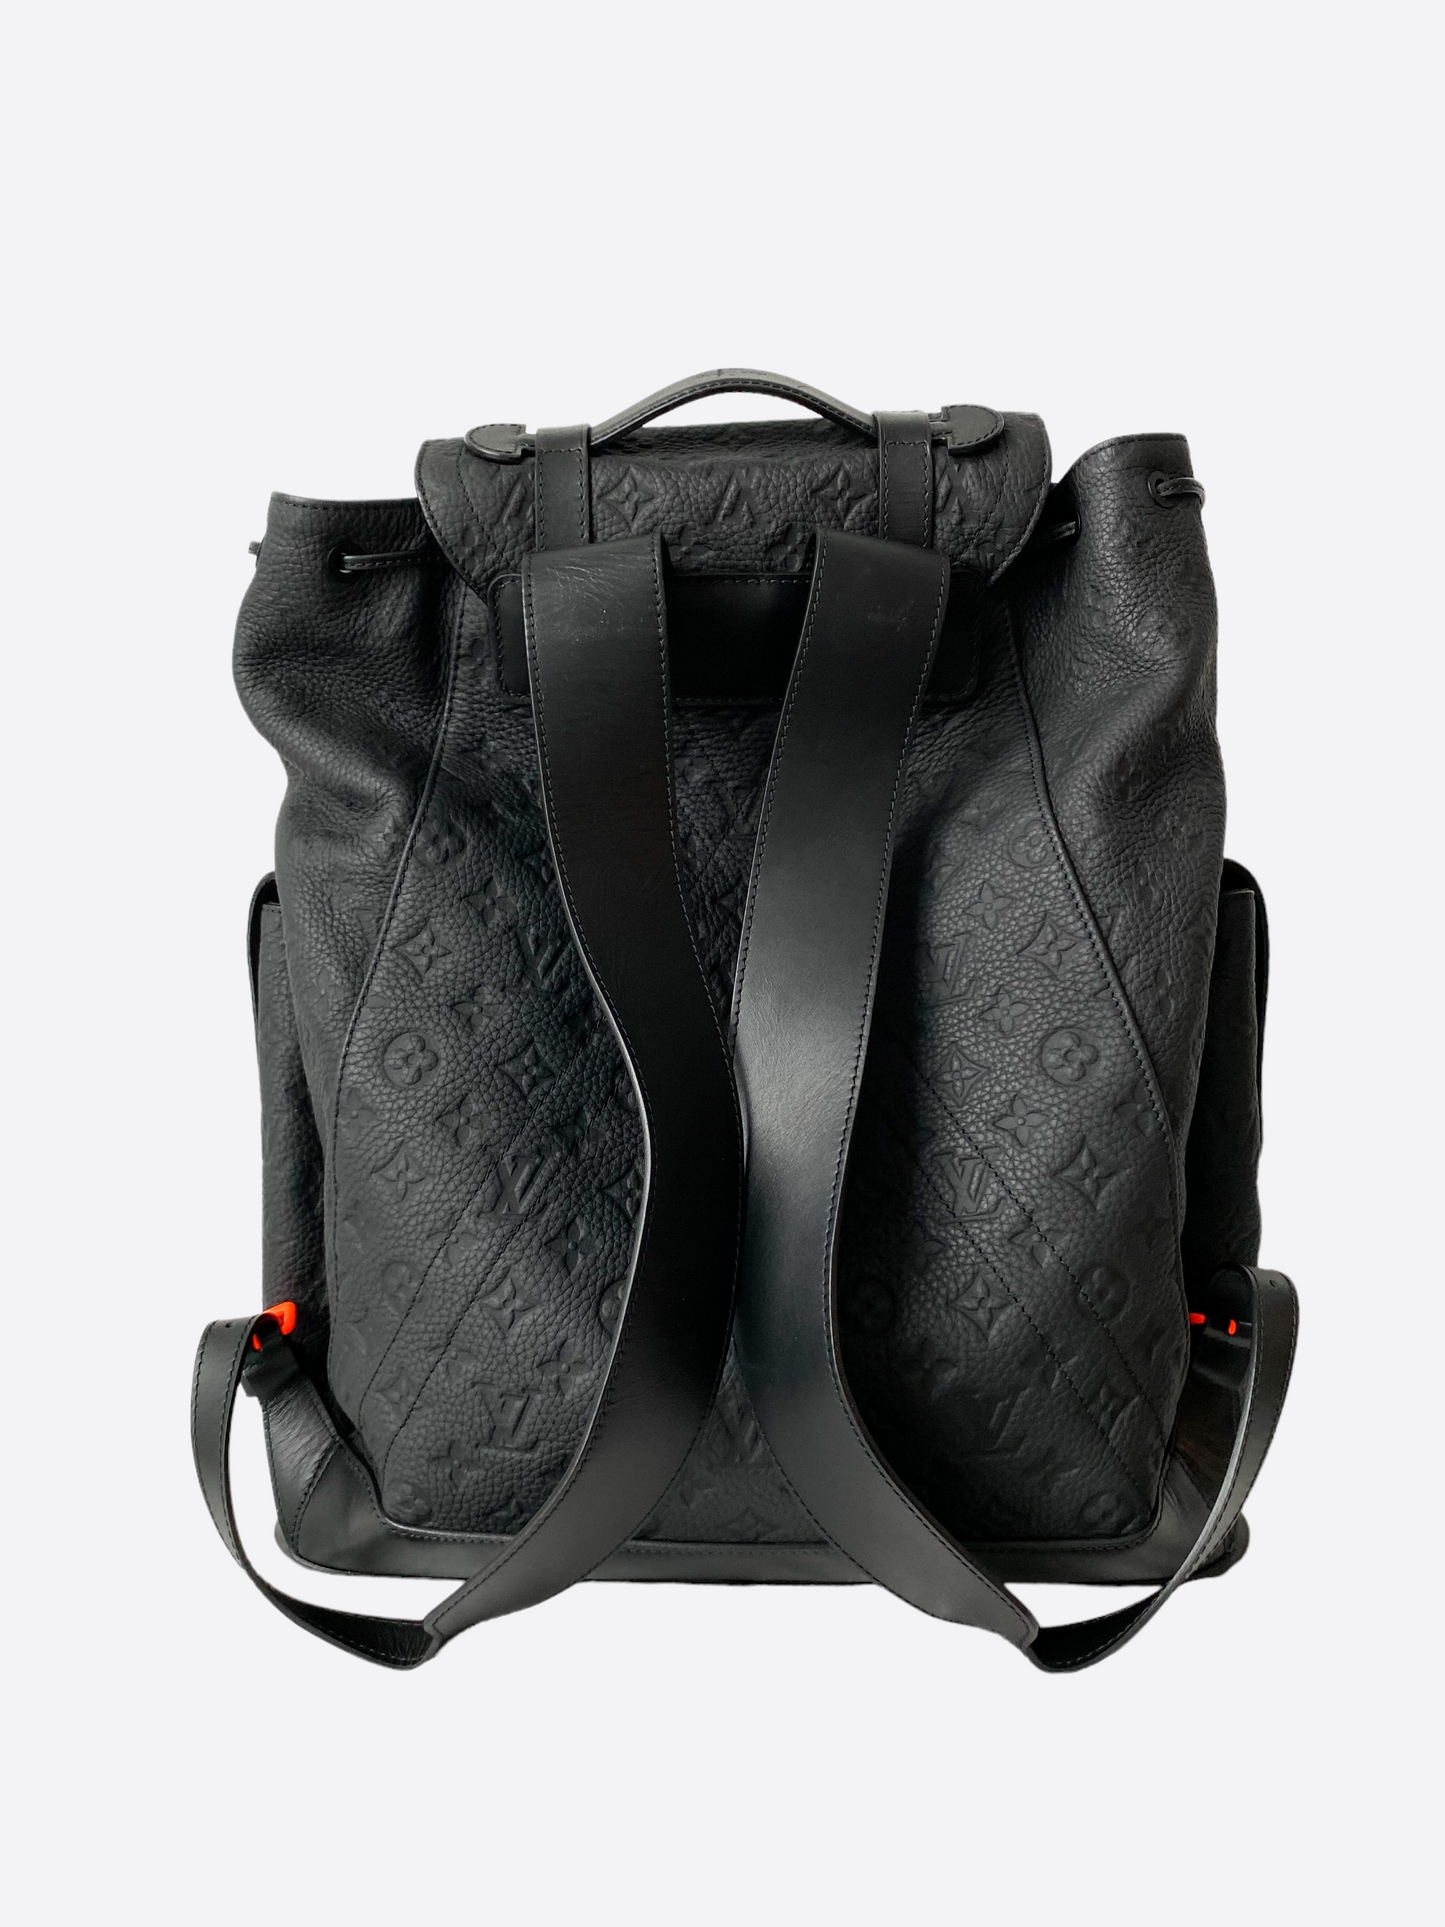 Louis Vuitton Black & Orange Trim Christopher Backpack worn by